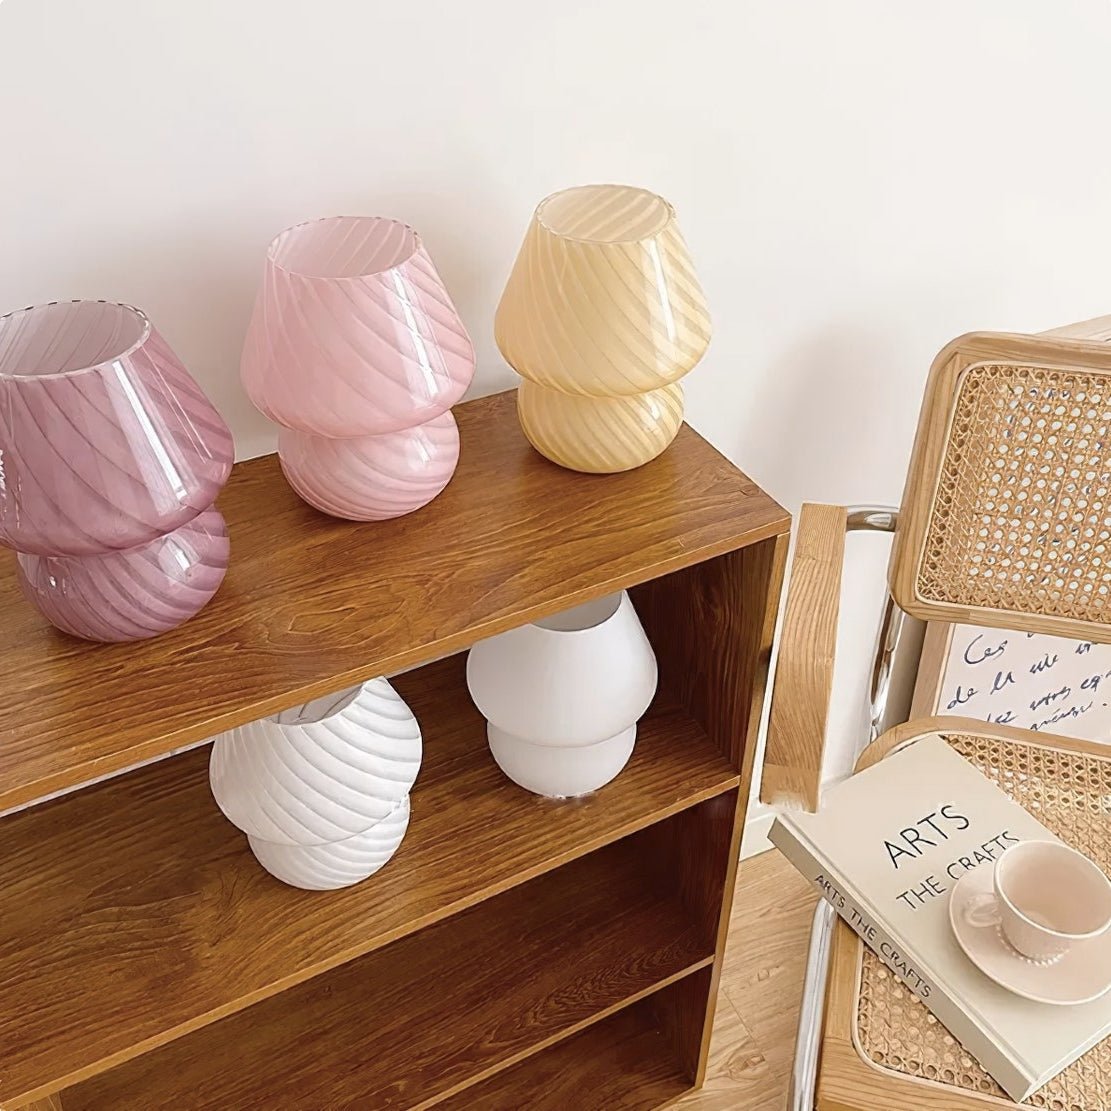 Shelf with cute glass mushroom lamps